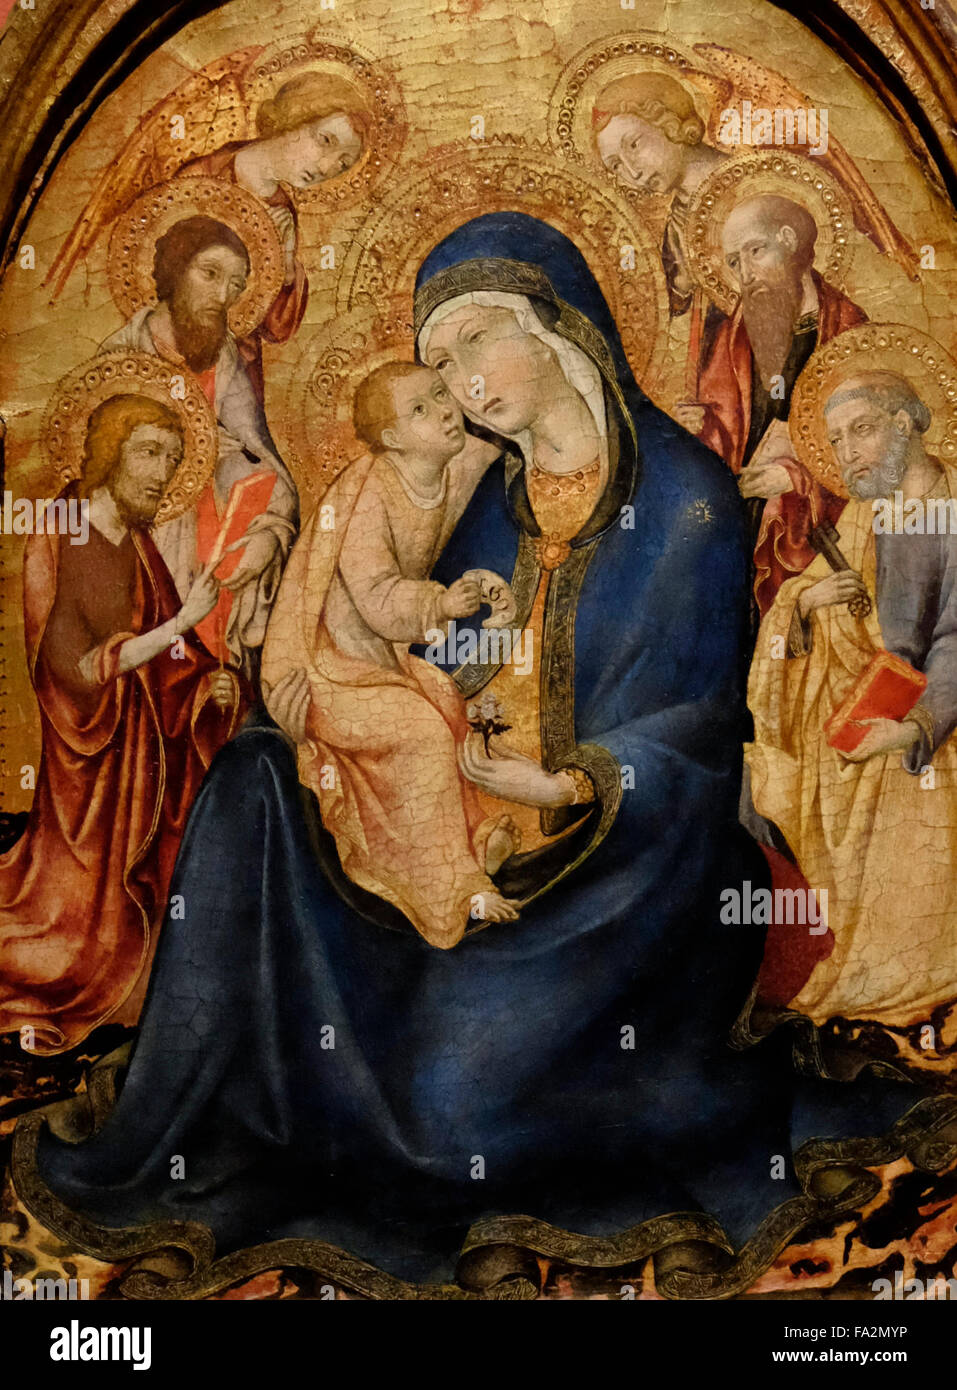 Madonna and Child with Saints - Sano di Pietro - 1400s Stock Photo